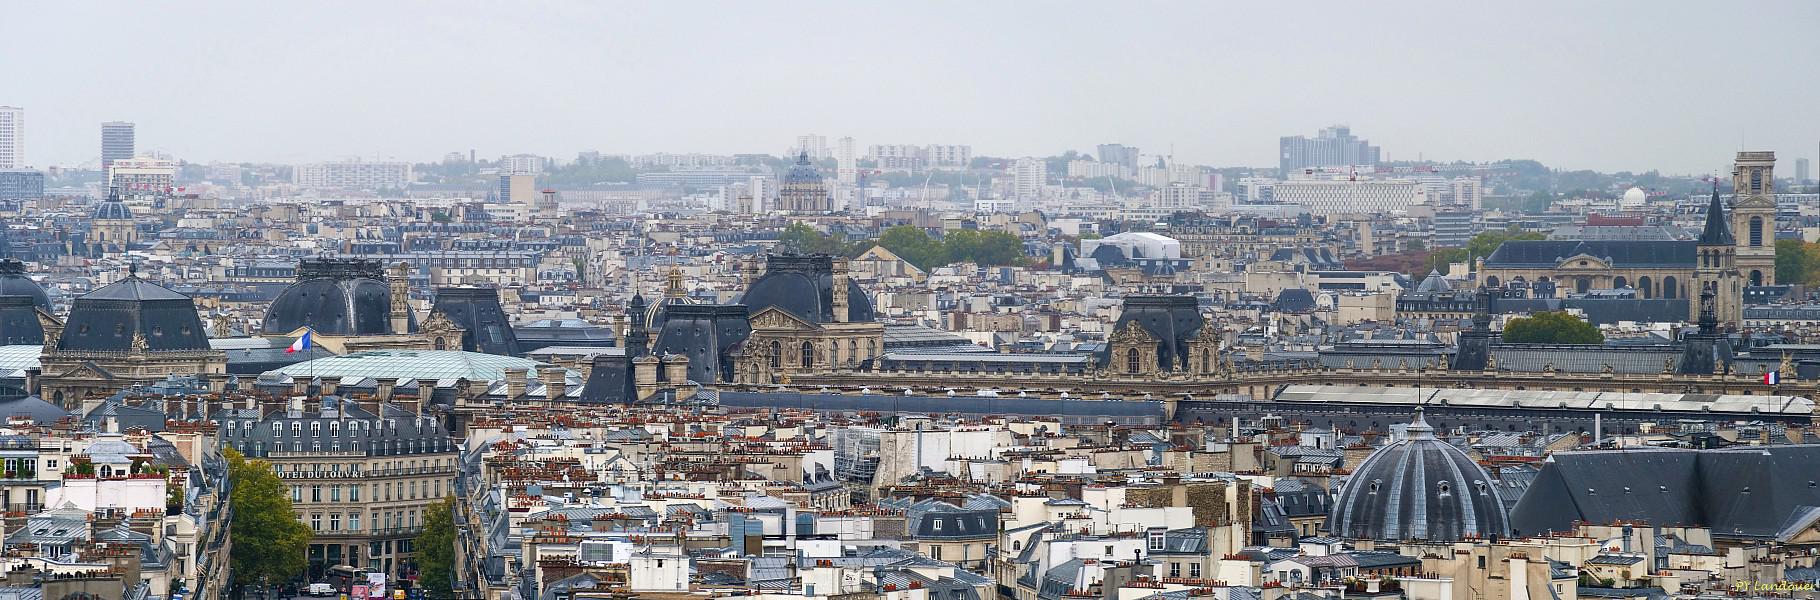 Paris vu d'en haut, Louvre, Vues du toit de l'Opra Garnier